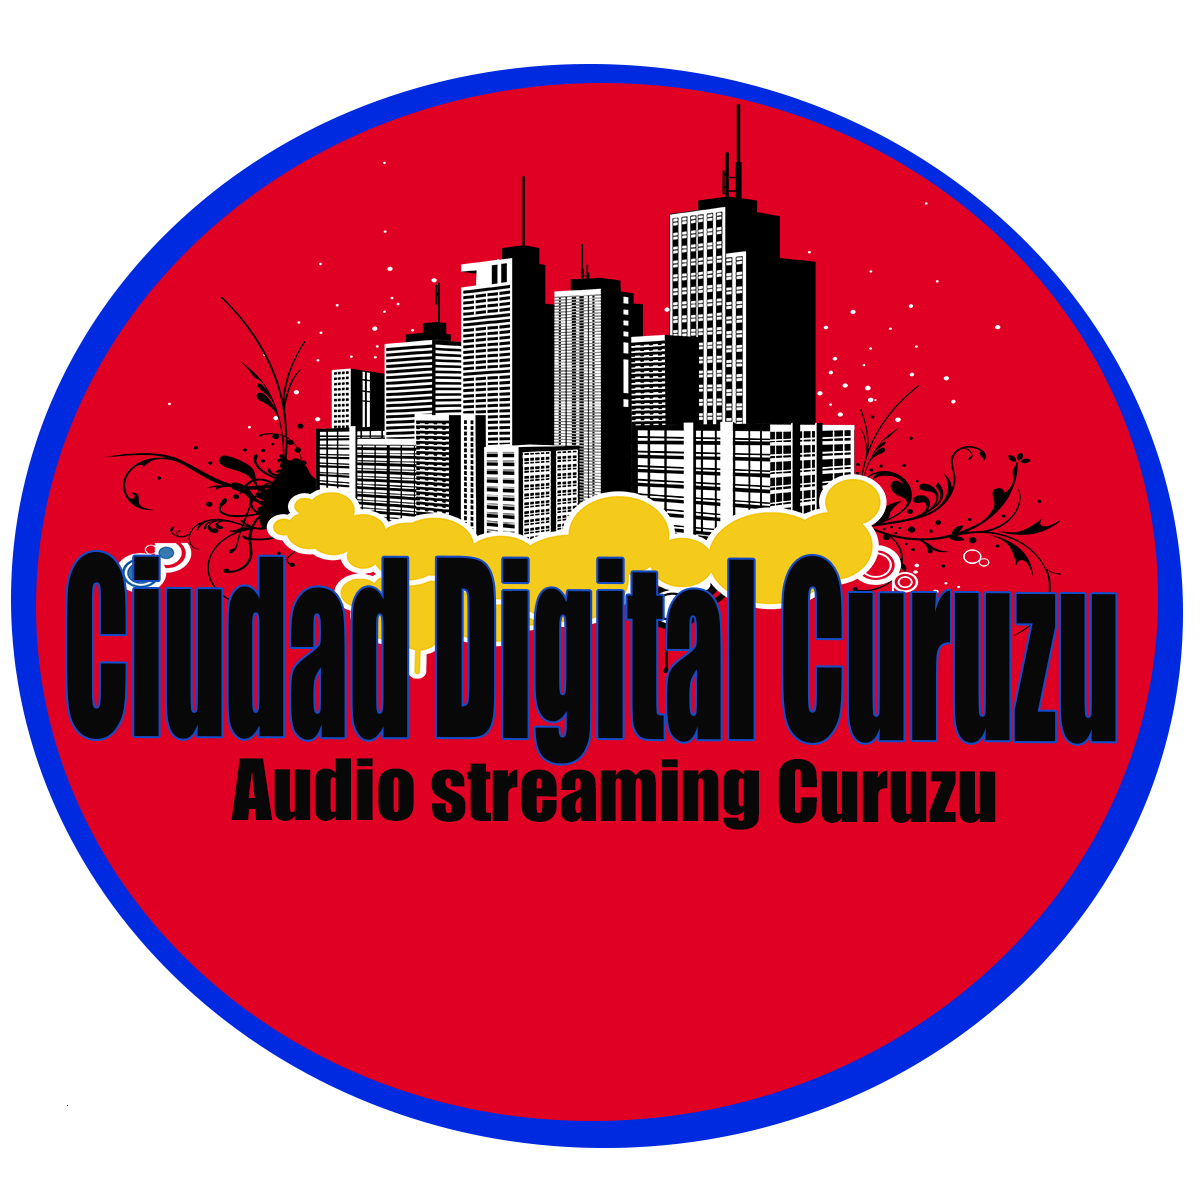 Ciudad Digital Curuzu